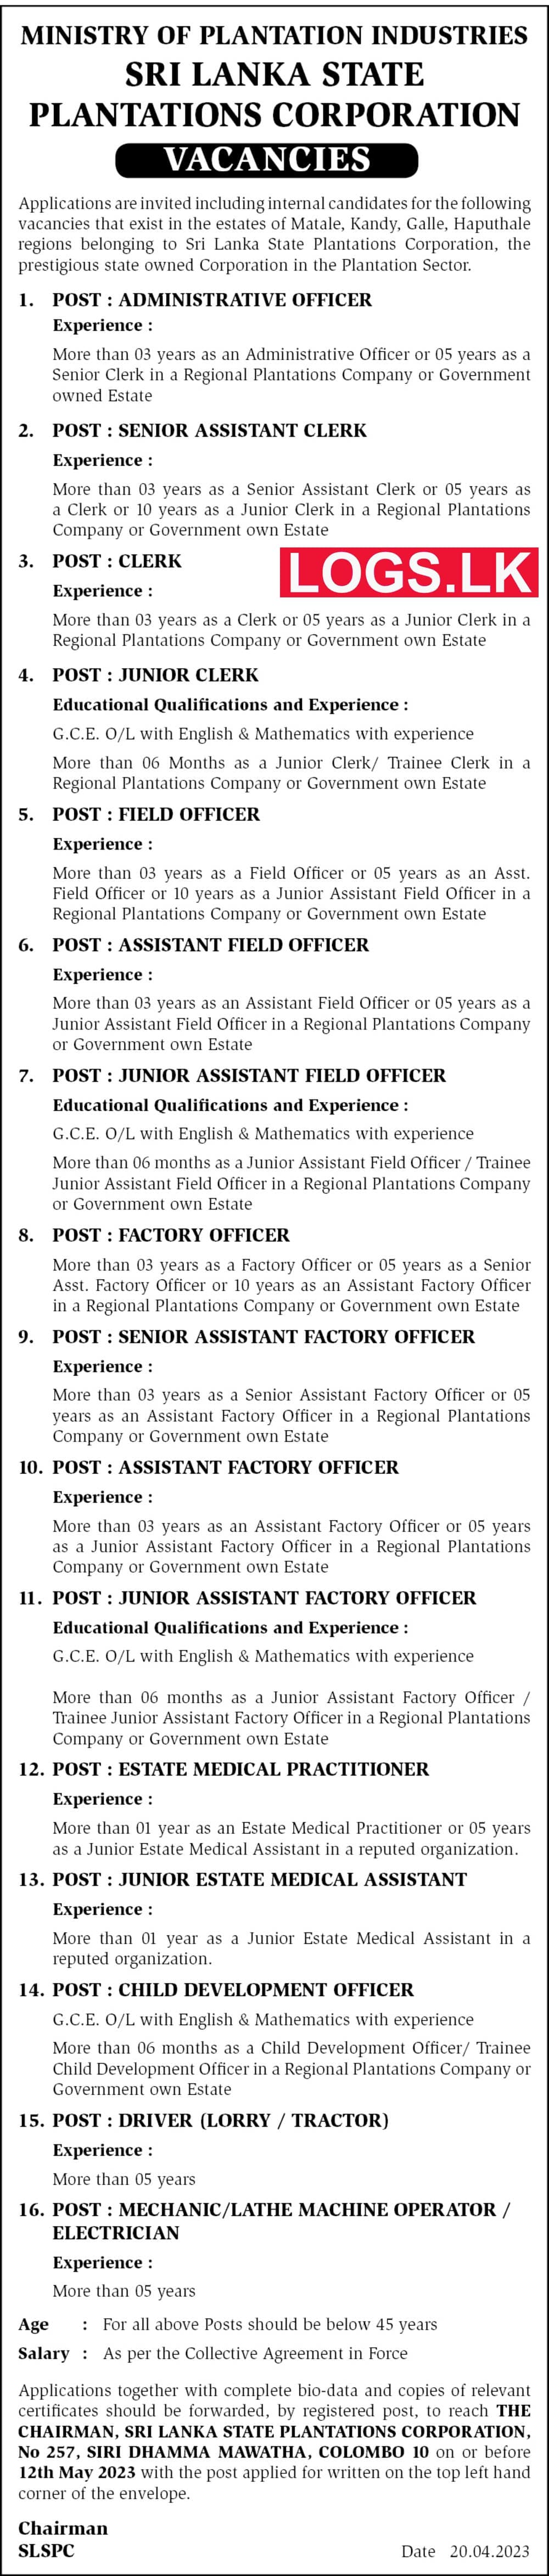 Ministry of Plantation Industries Job Vacancies